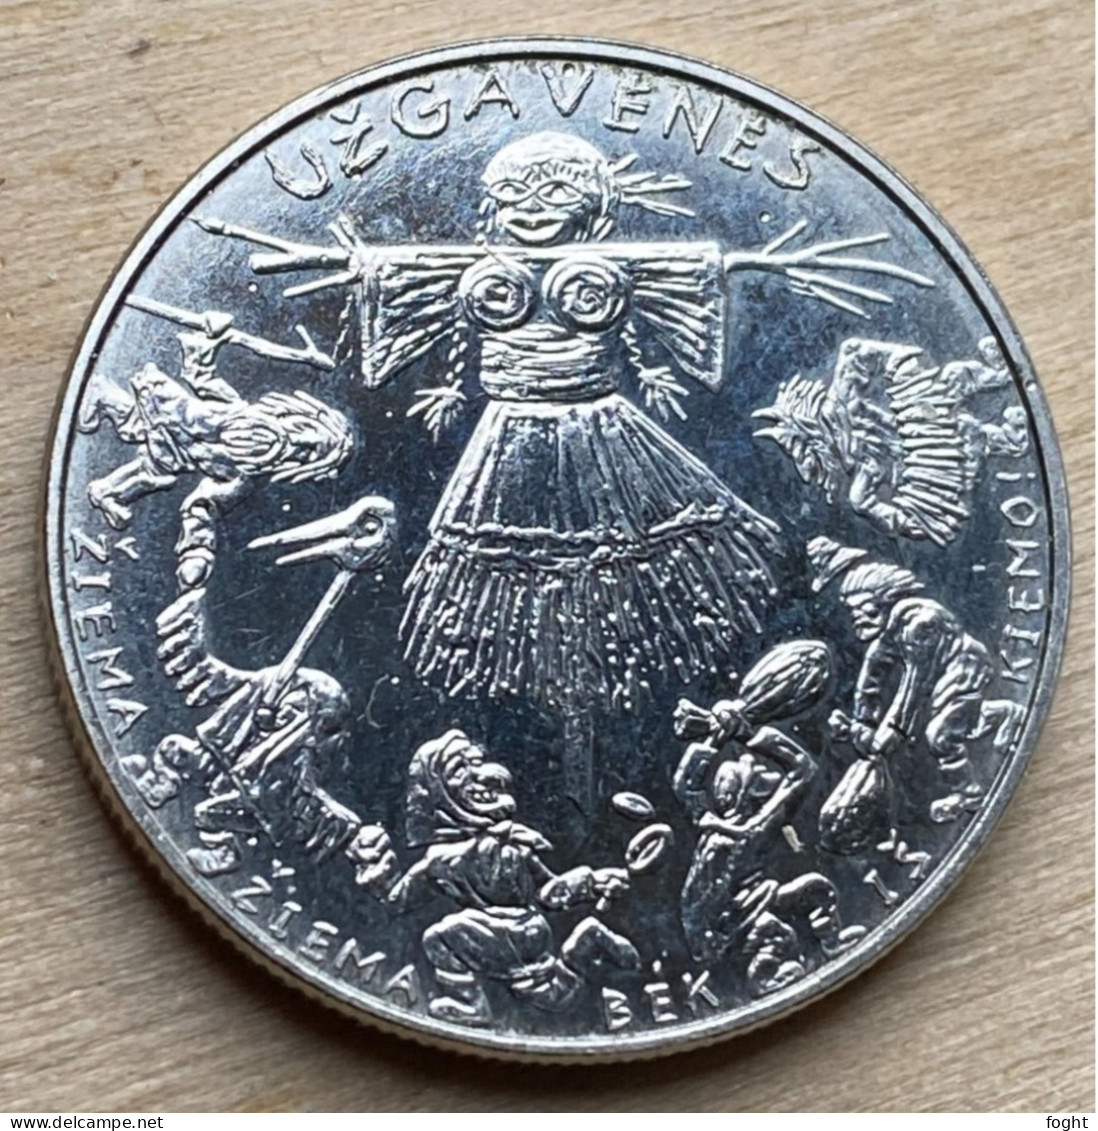 2019 LMK Lithuania "Traditional Lithuanian Celebrations" 1.5 Euro Coin,KM#234,7119 - Lituania